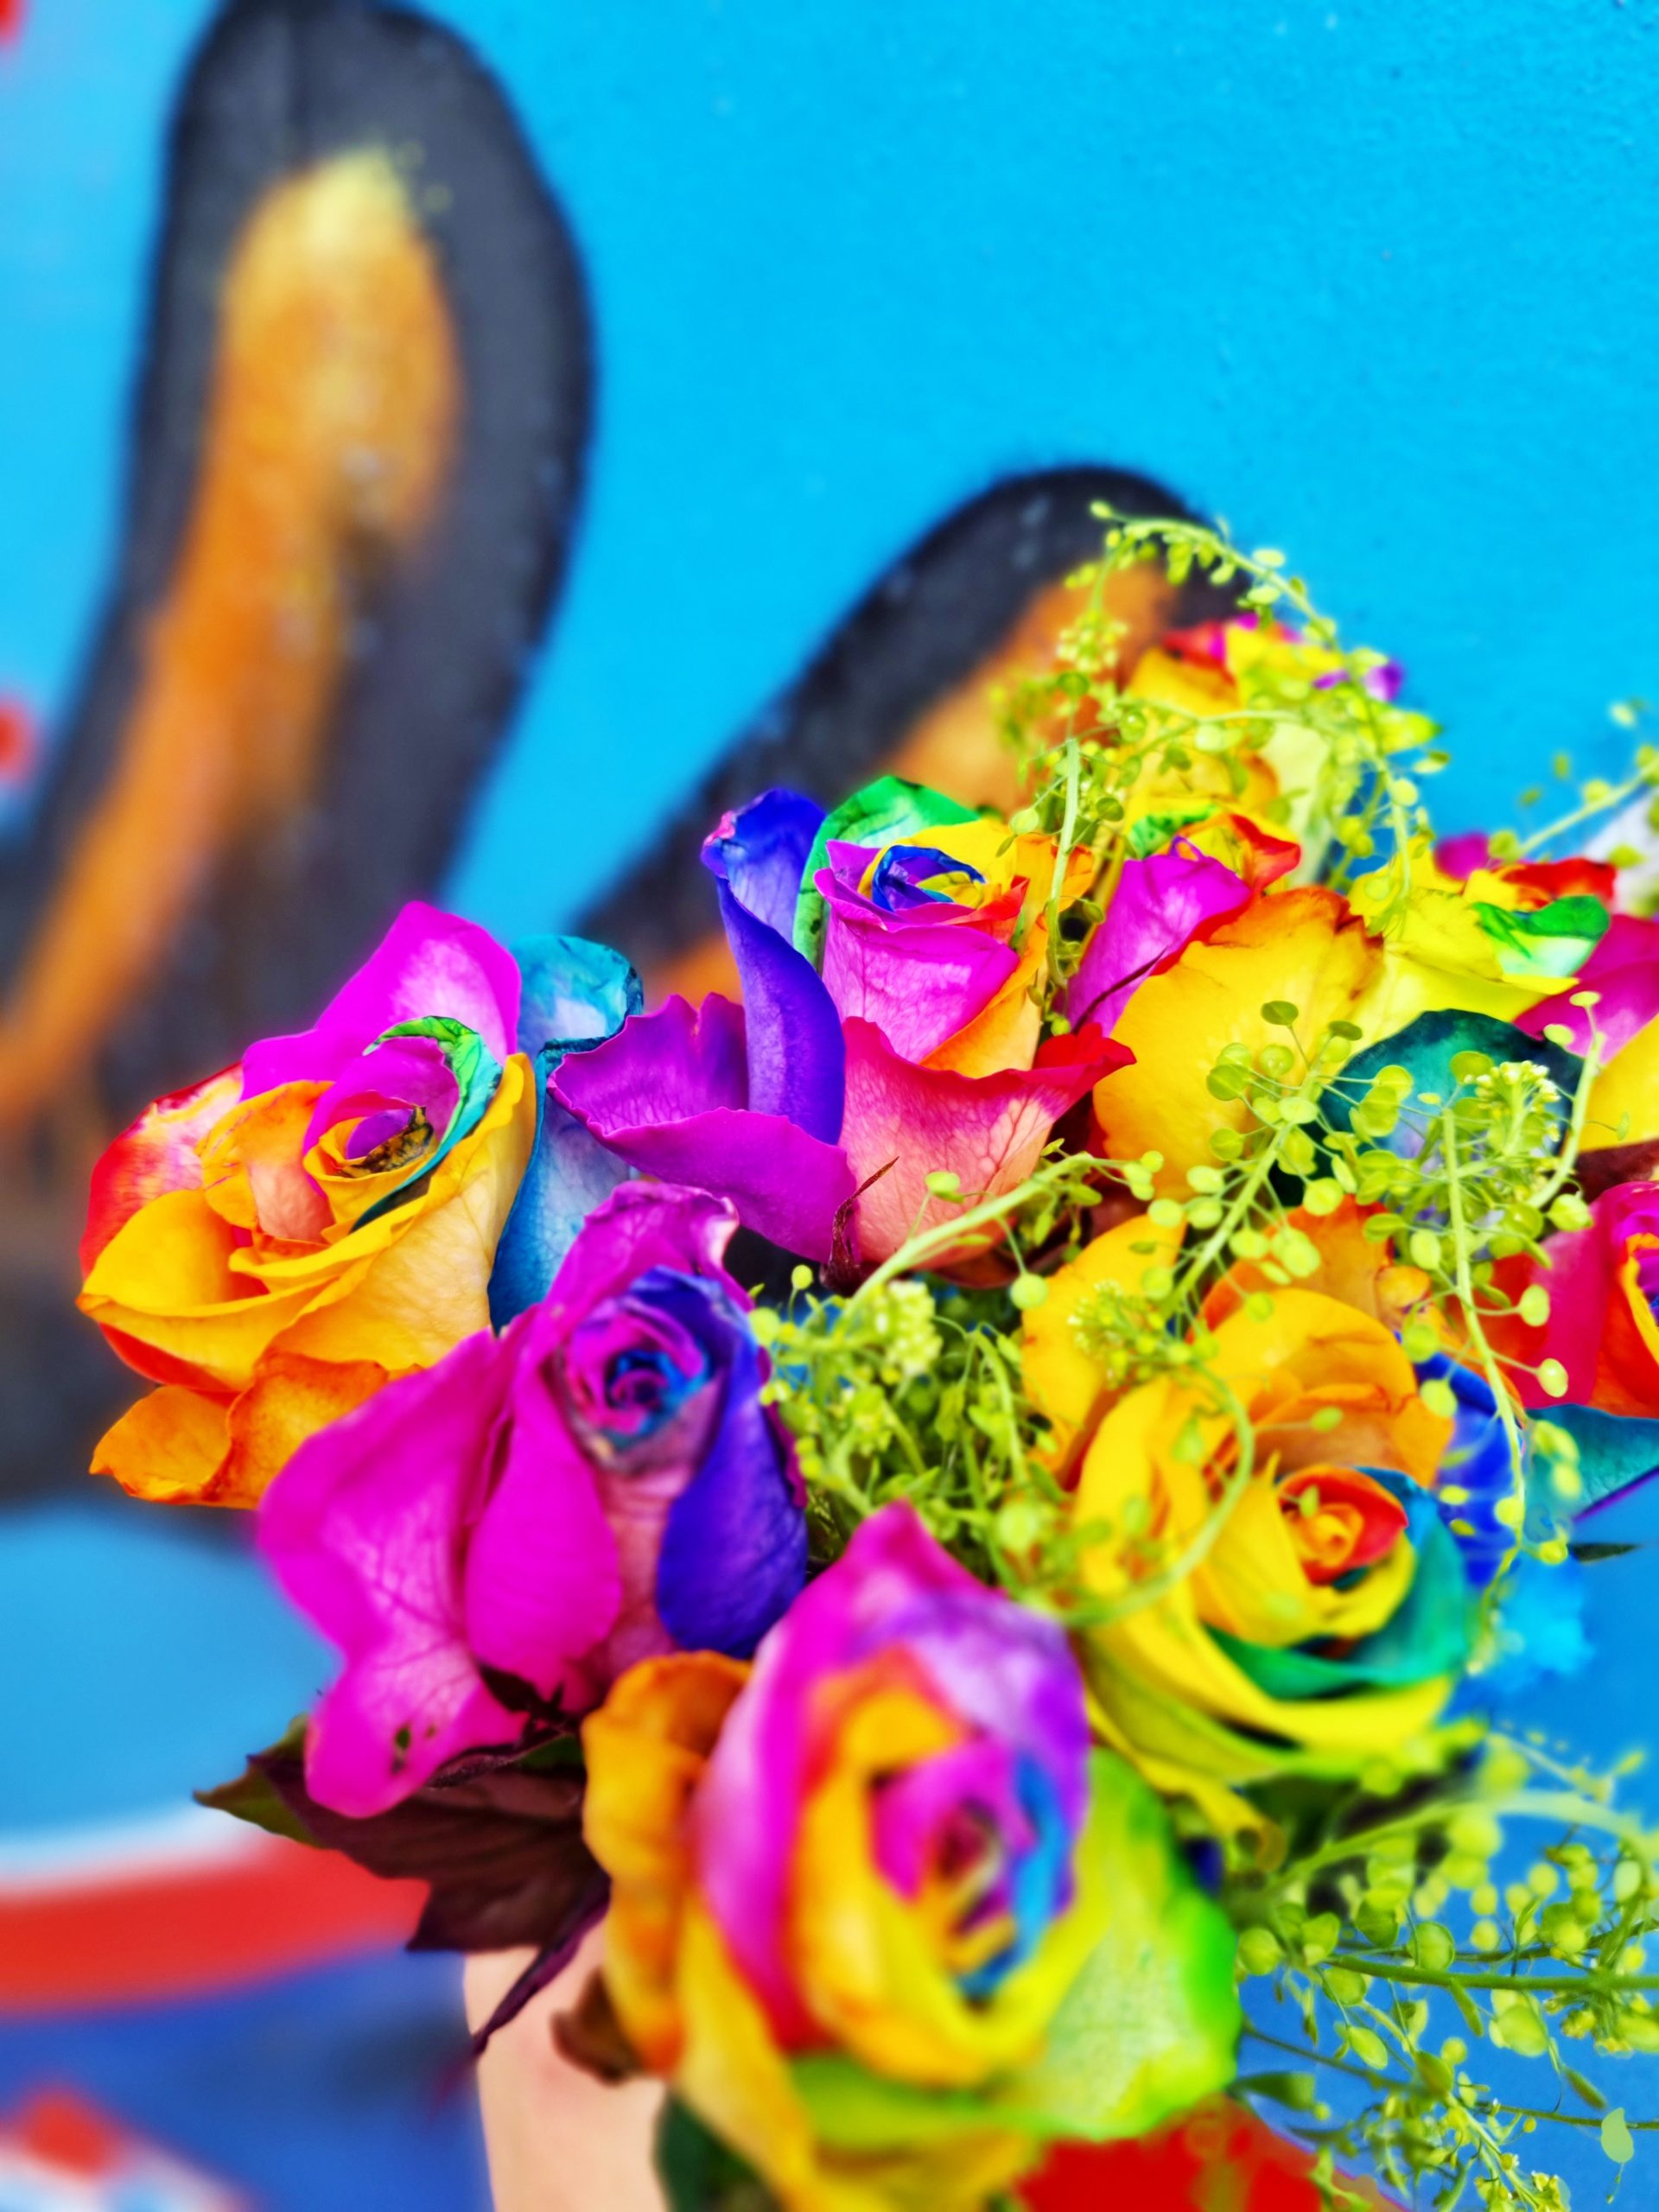 <img src="rainbow.jpg" alt="rainbow roses bouquet close up"/> 